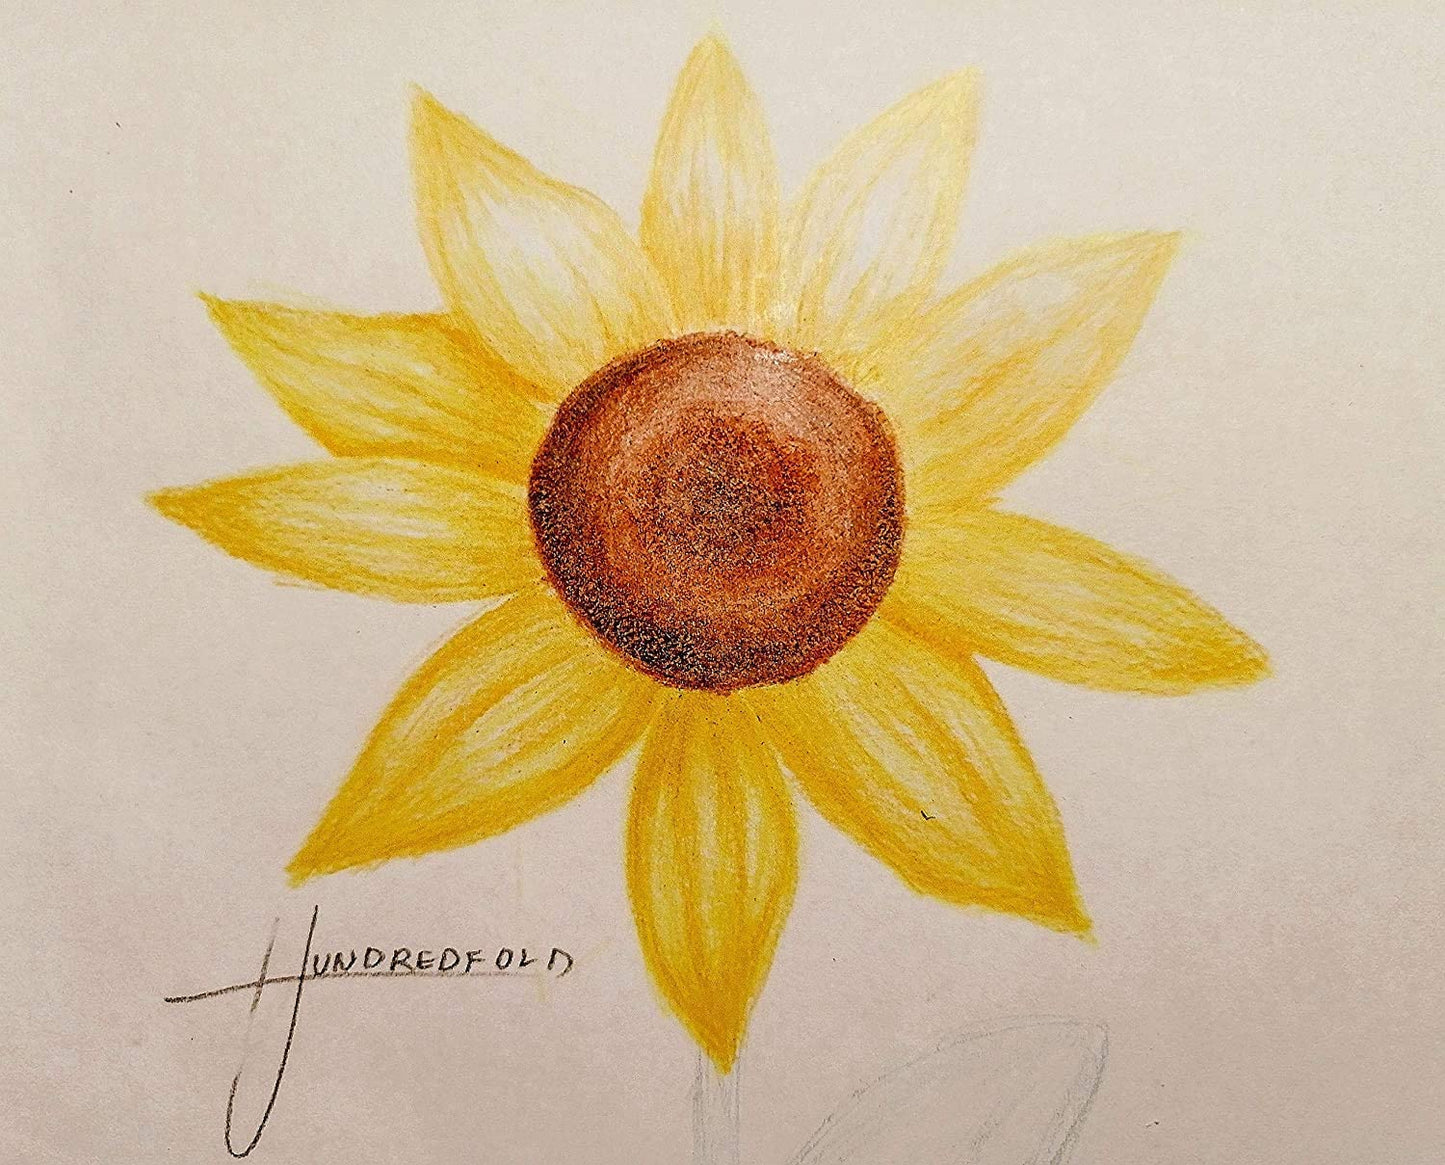 Hundredfold Lemon Queen Sunflower 30 Flower Seeds - Helianthus annus Attract Bees and Birds, Cut-Flowers